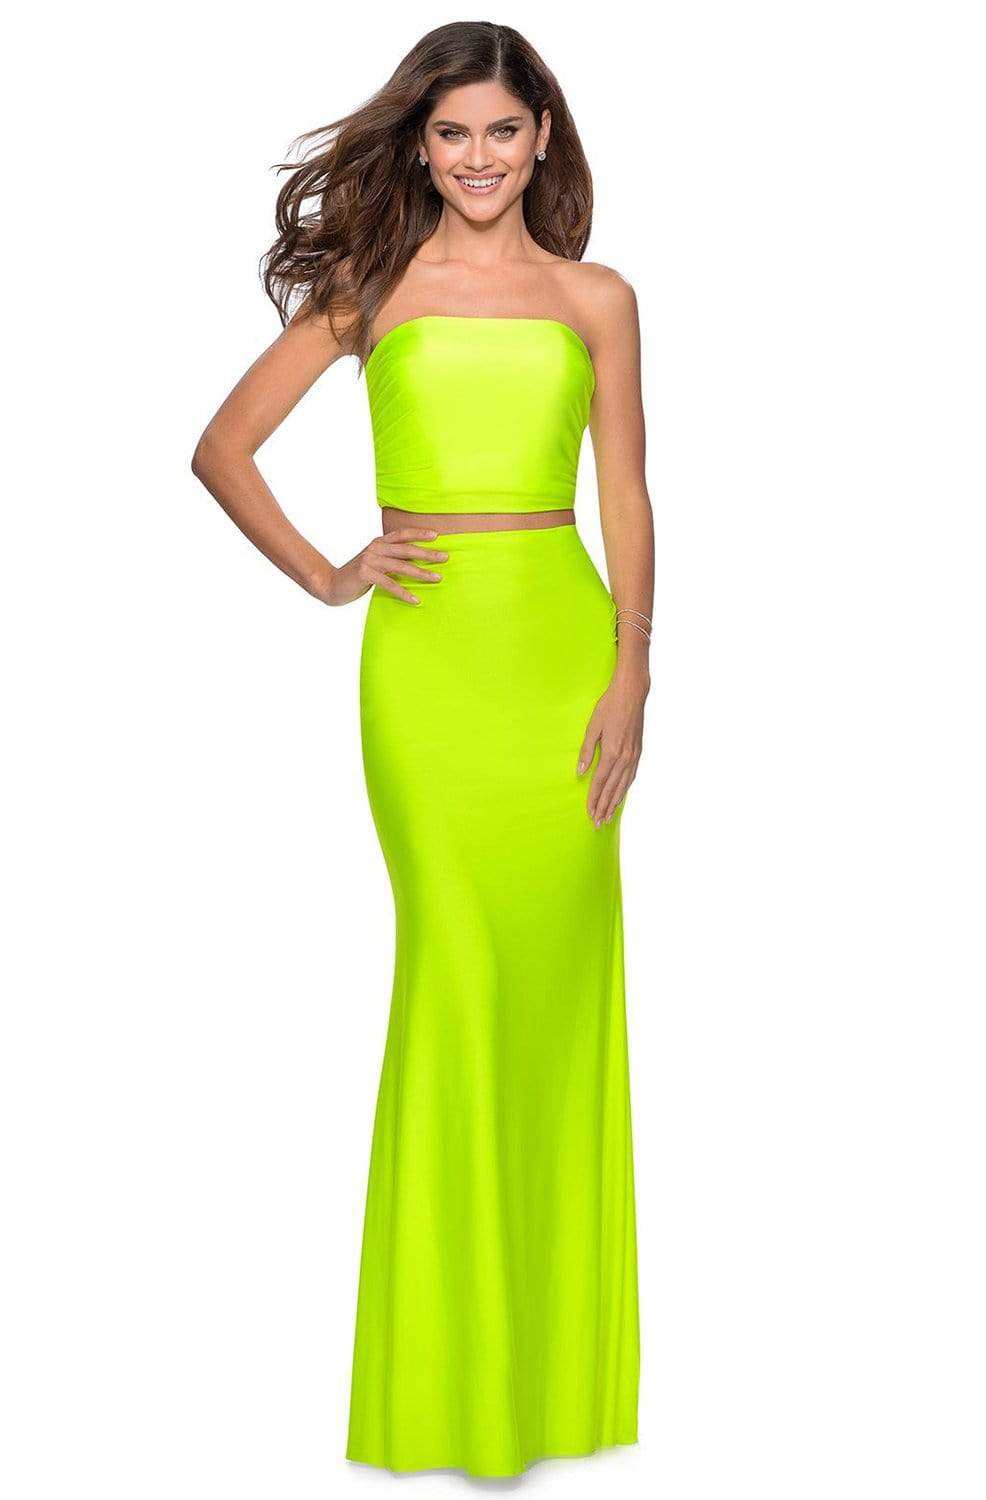 La Femme - 28972 Two Piece Strapless Jersey Sheath Dress Prom Dresses 00 / Neon Yellow